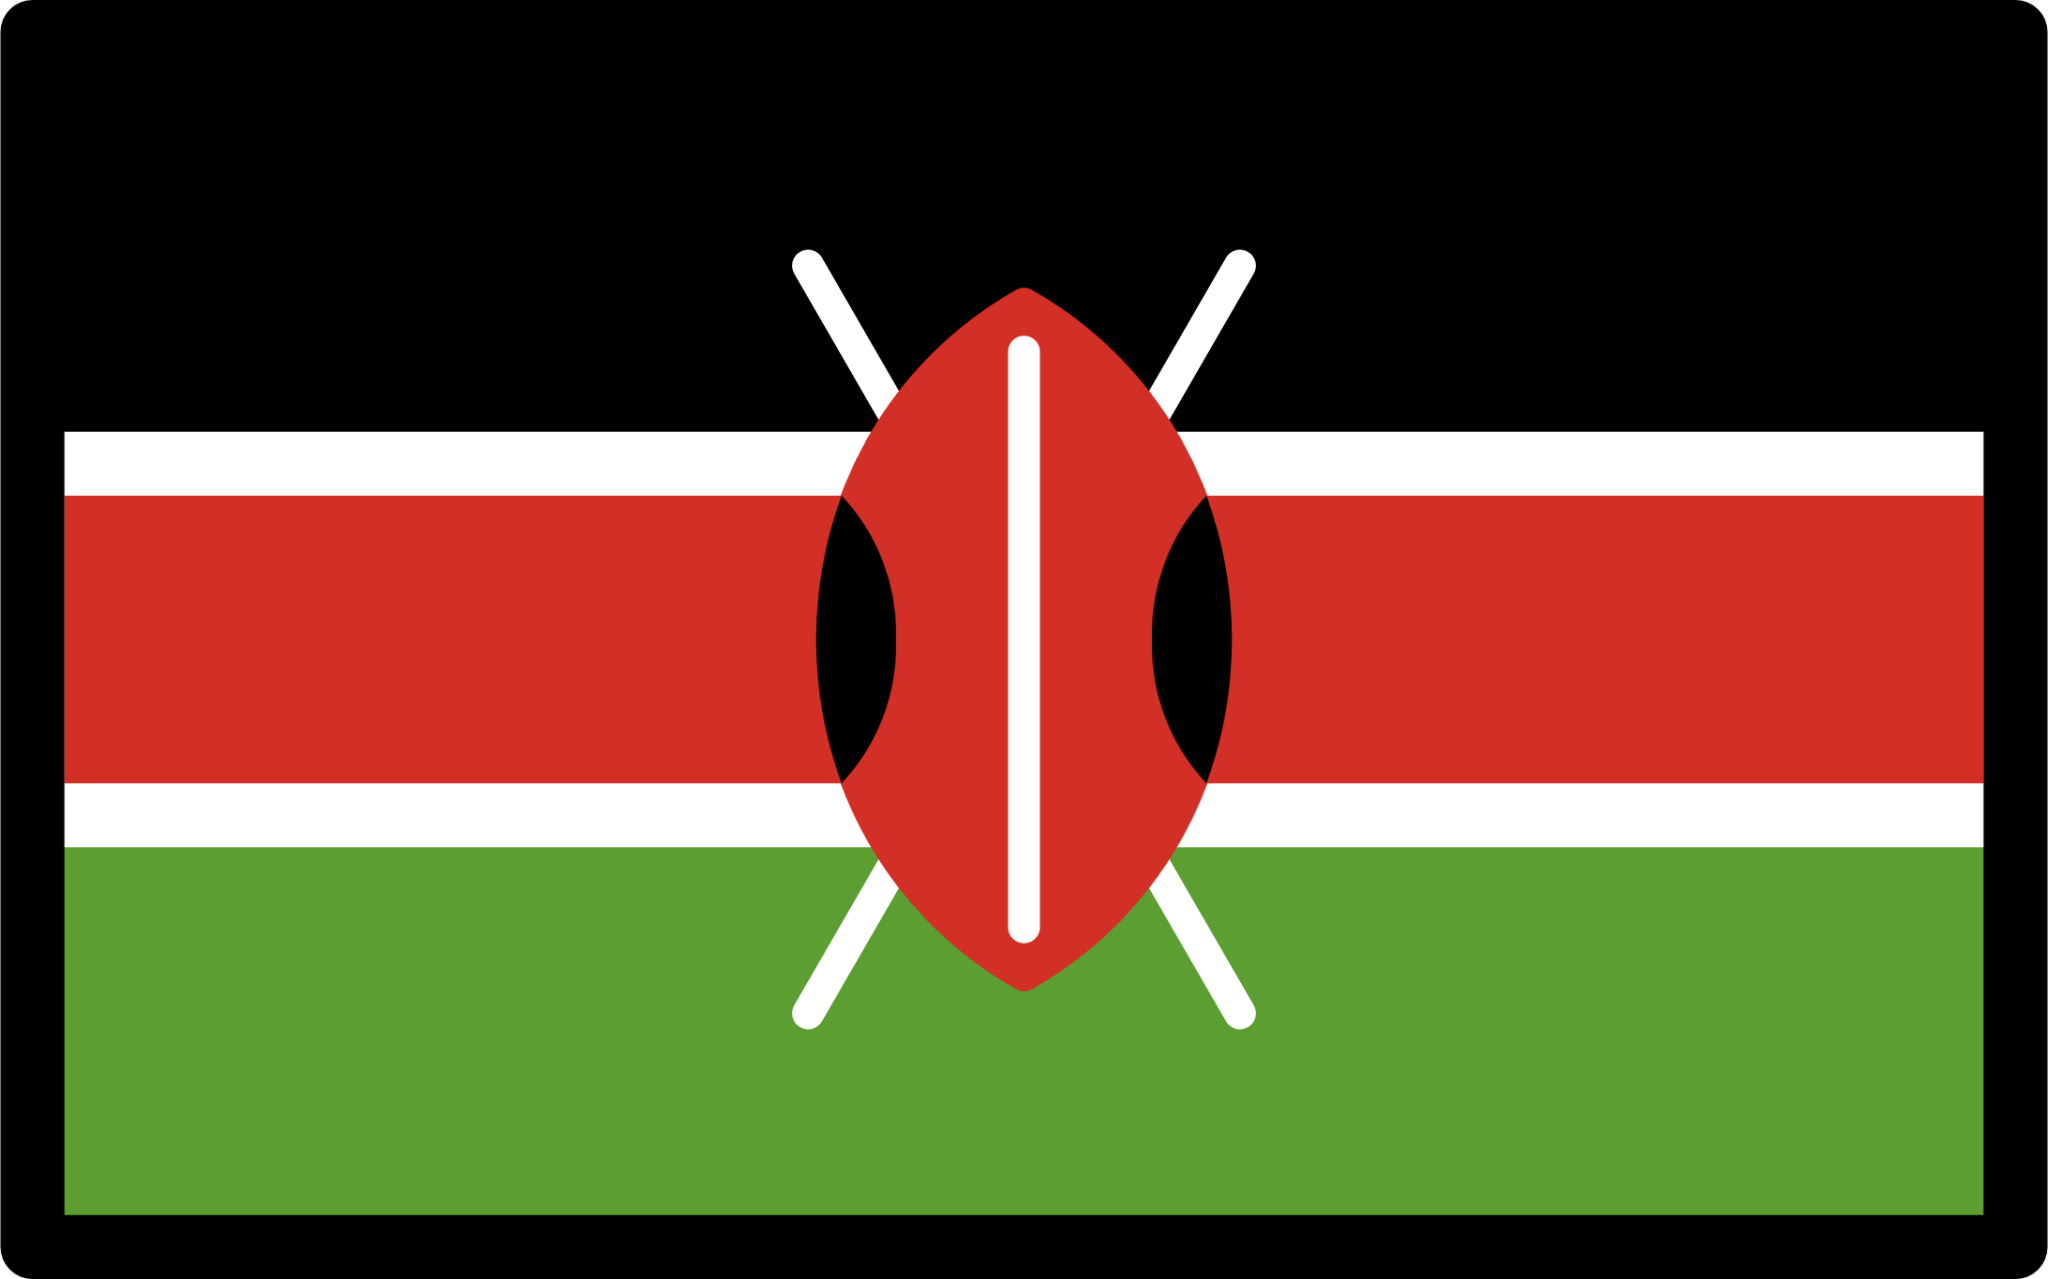 flag: Kenya emoji